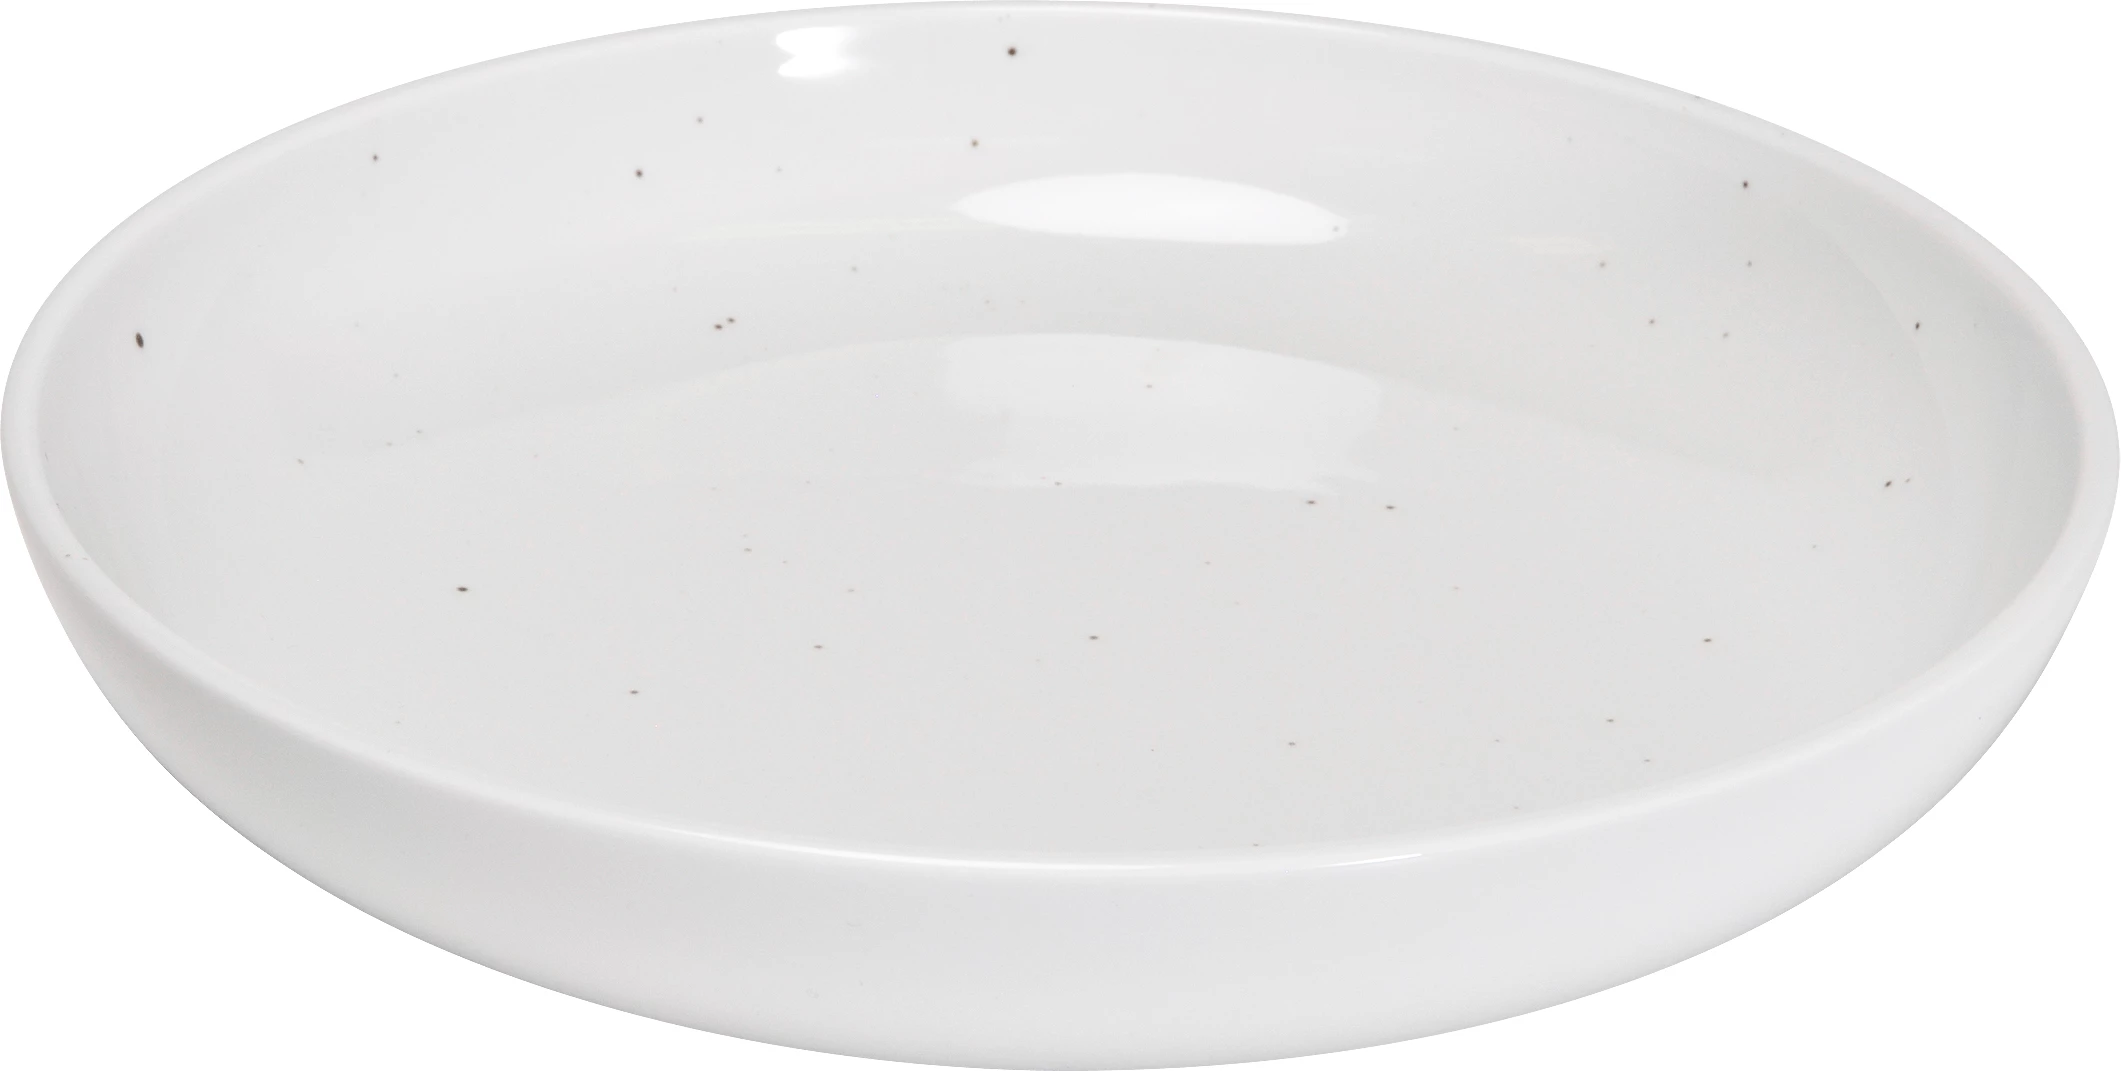 Figgjo Dryss tallerken med høj kant uden fane, flad, ø22 cm